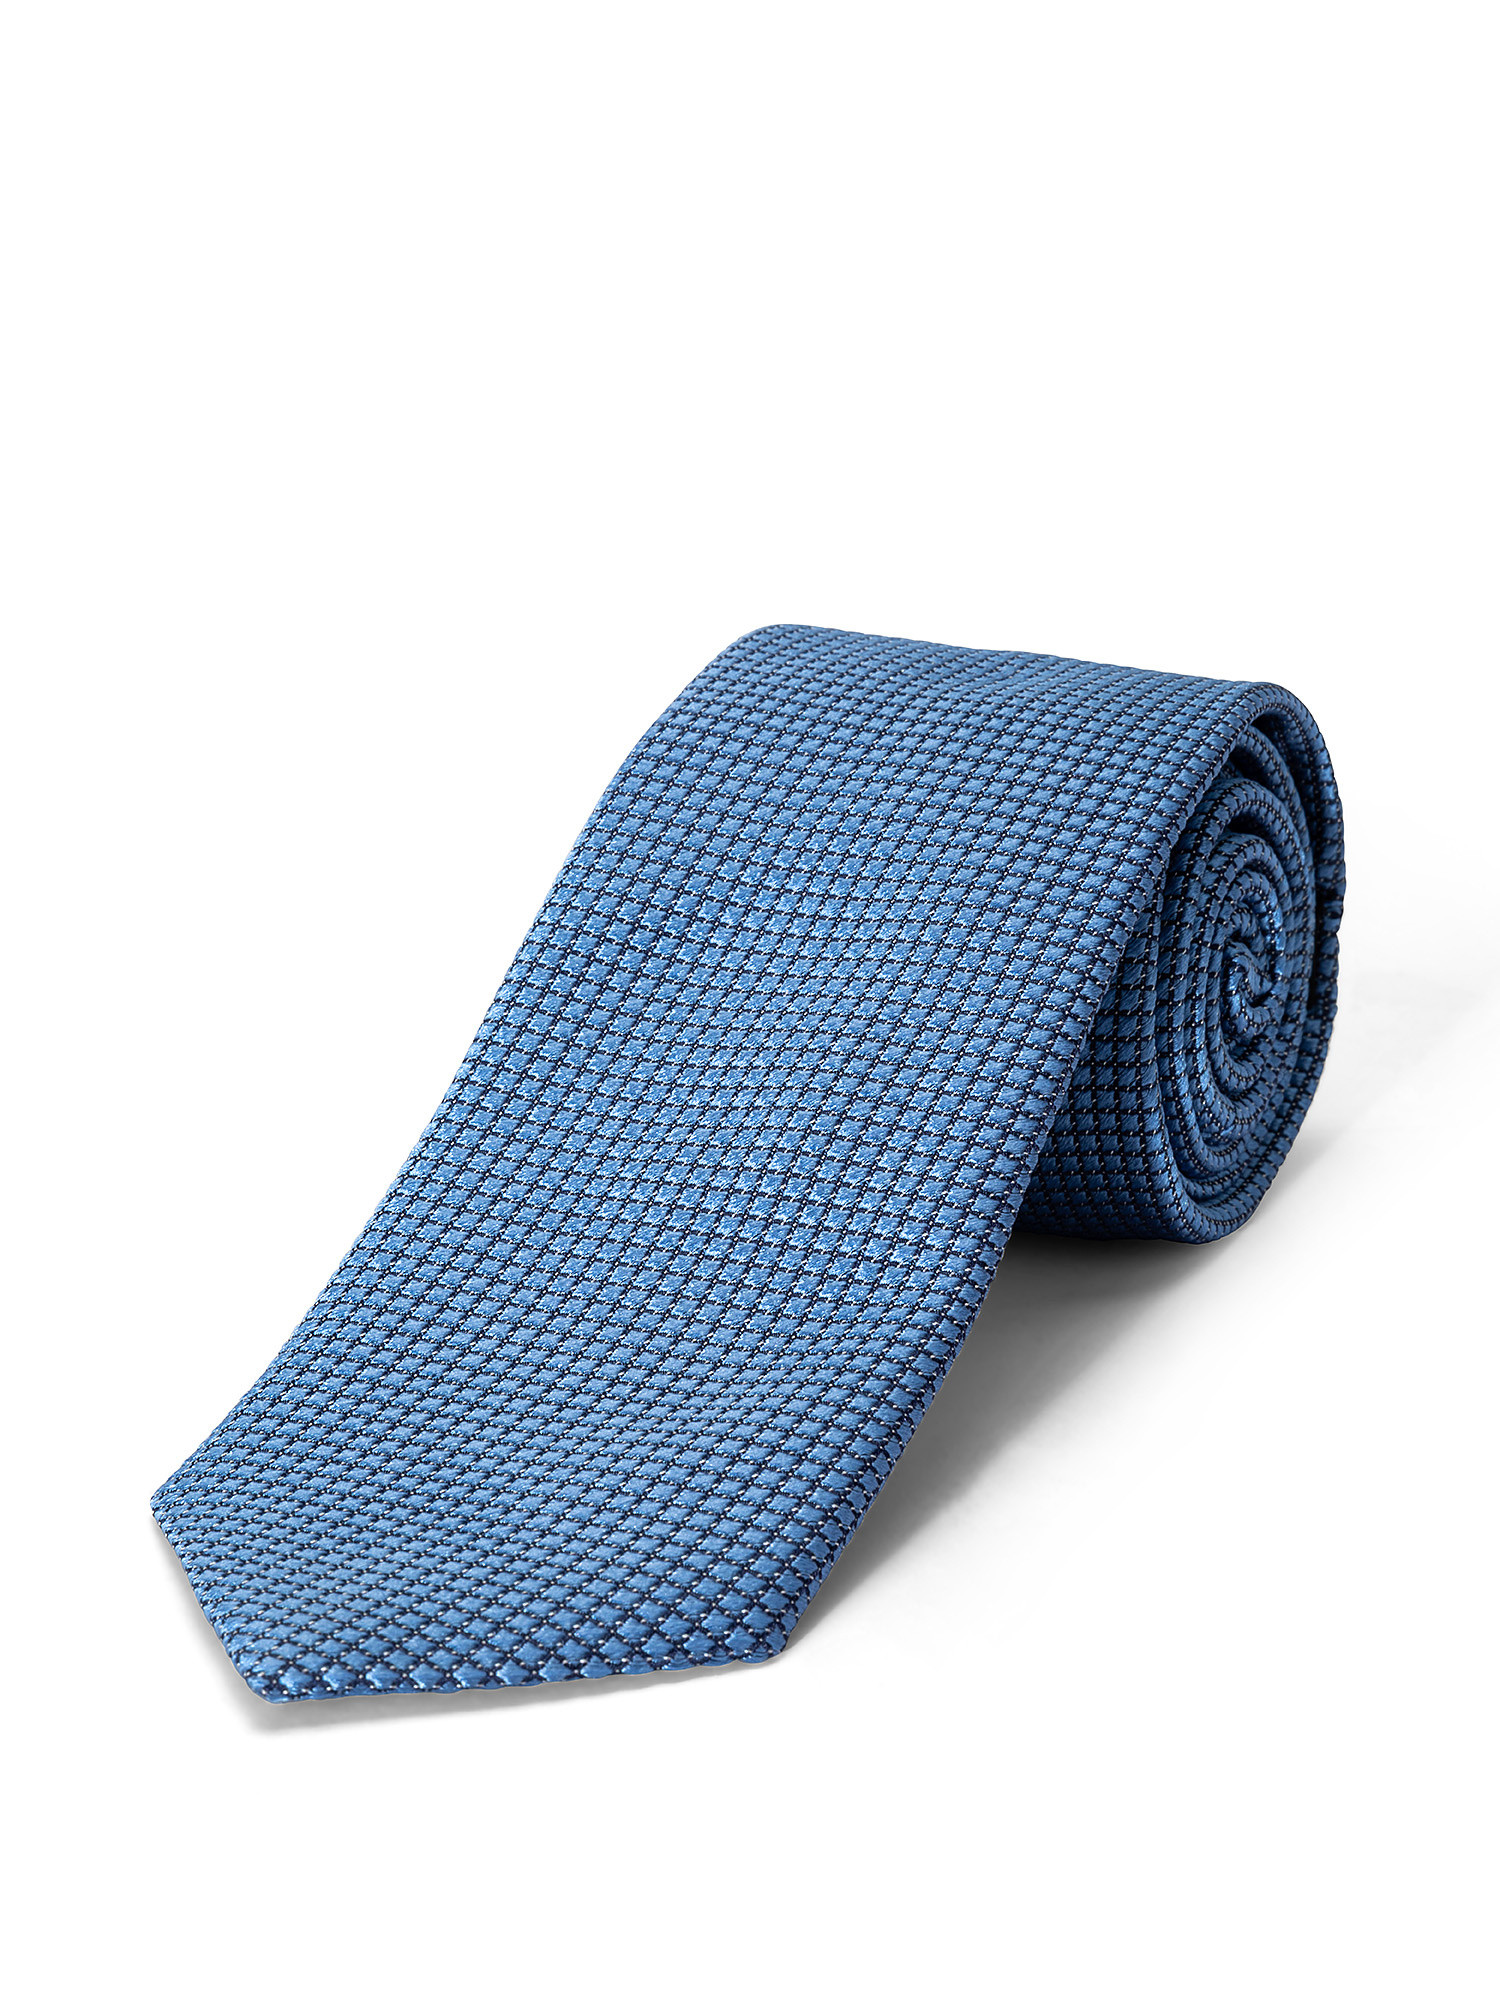 Cravatta in pura seta tinta unita, Azzurro, large